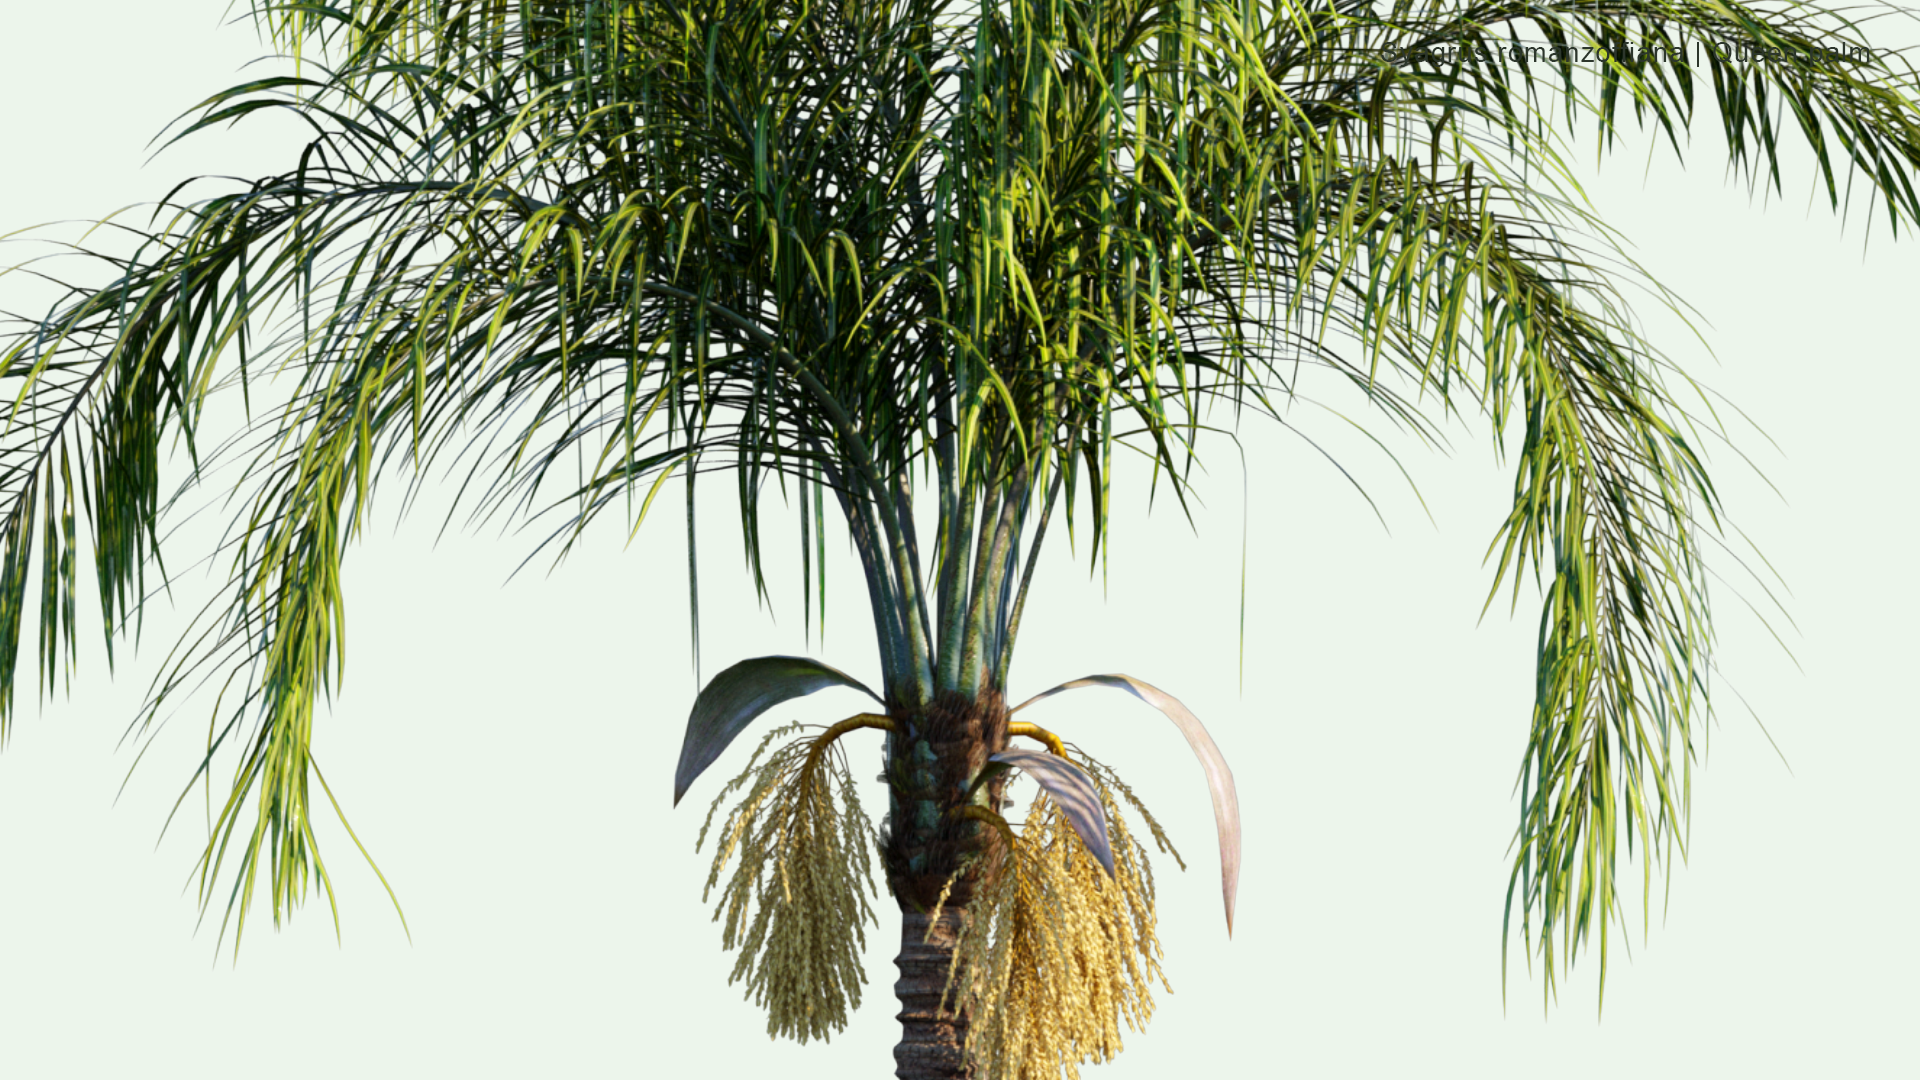 2D Syagrus Romanzoffiana - Queen Palm, Cocos Palm